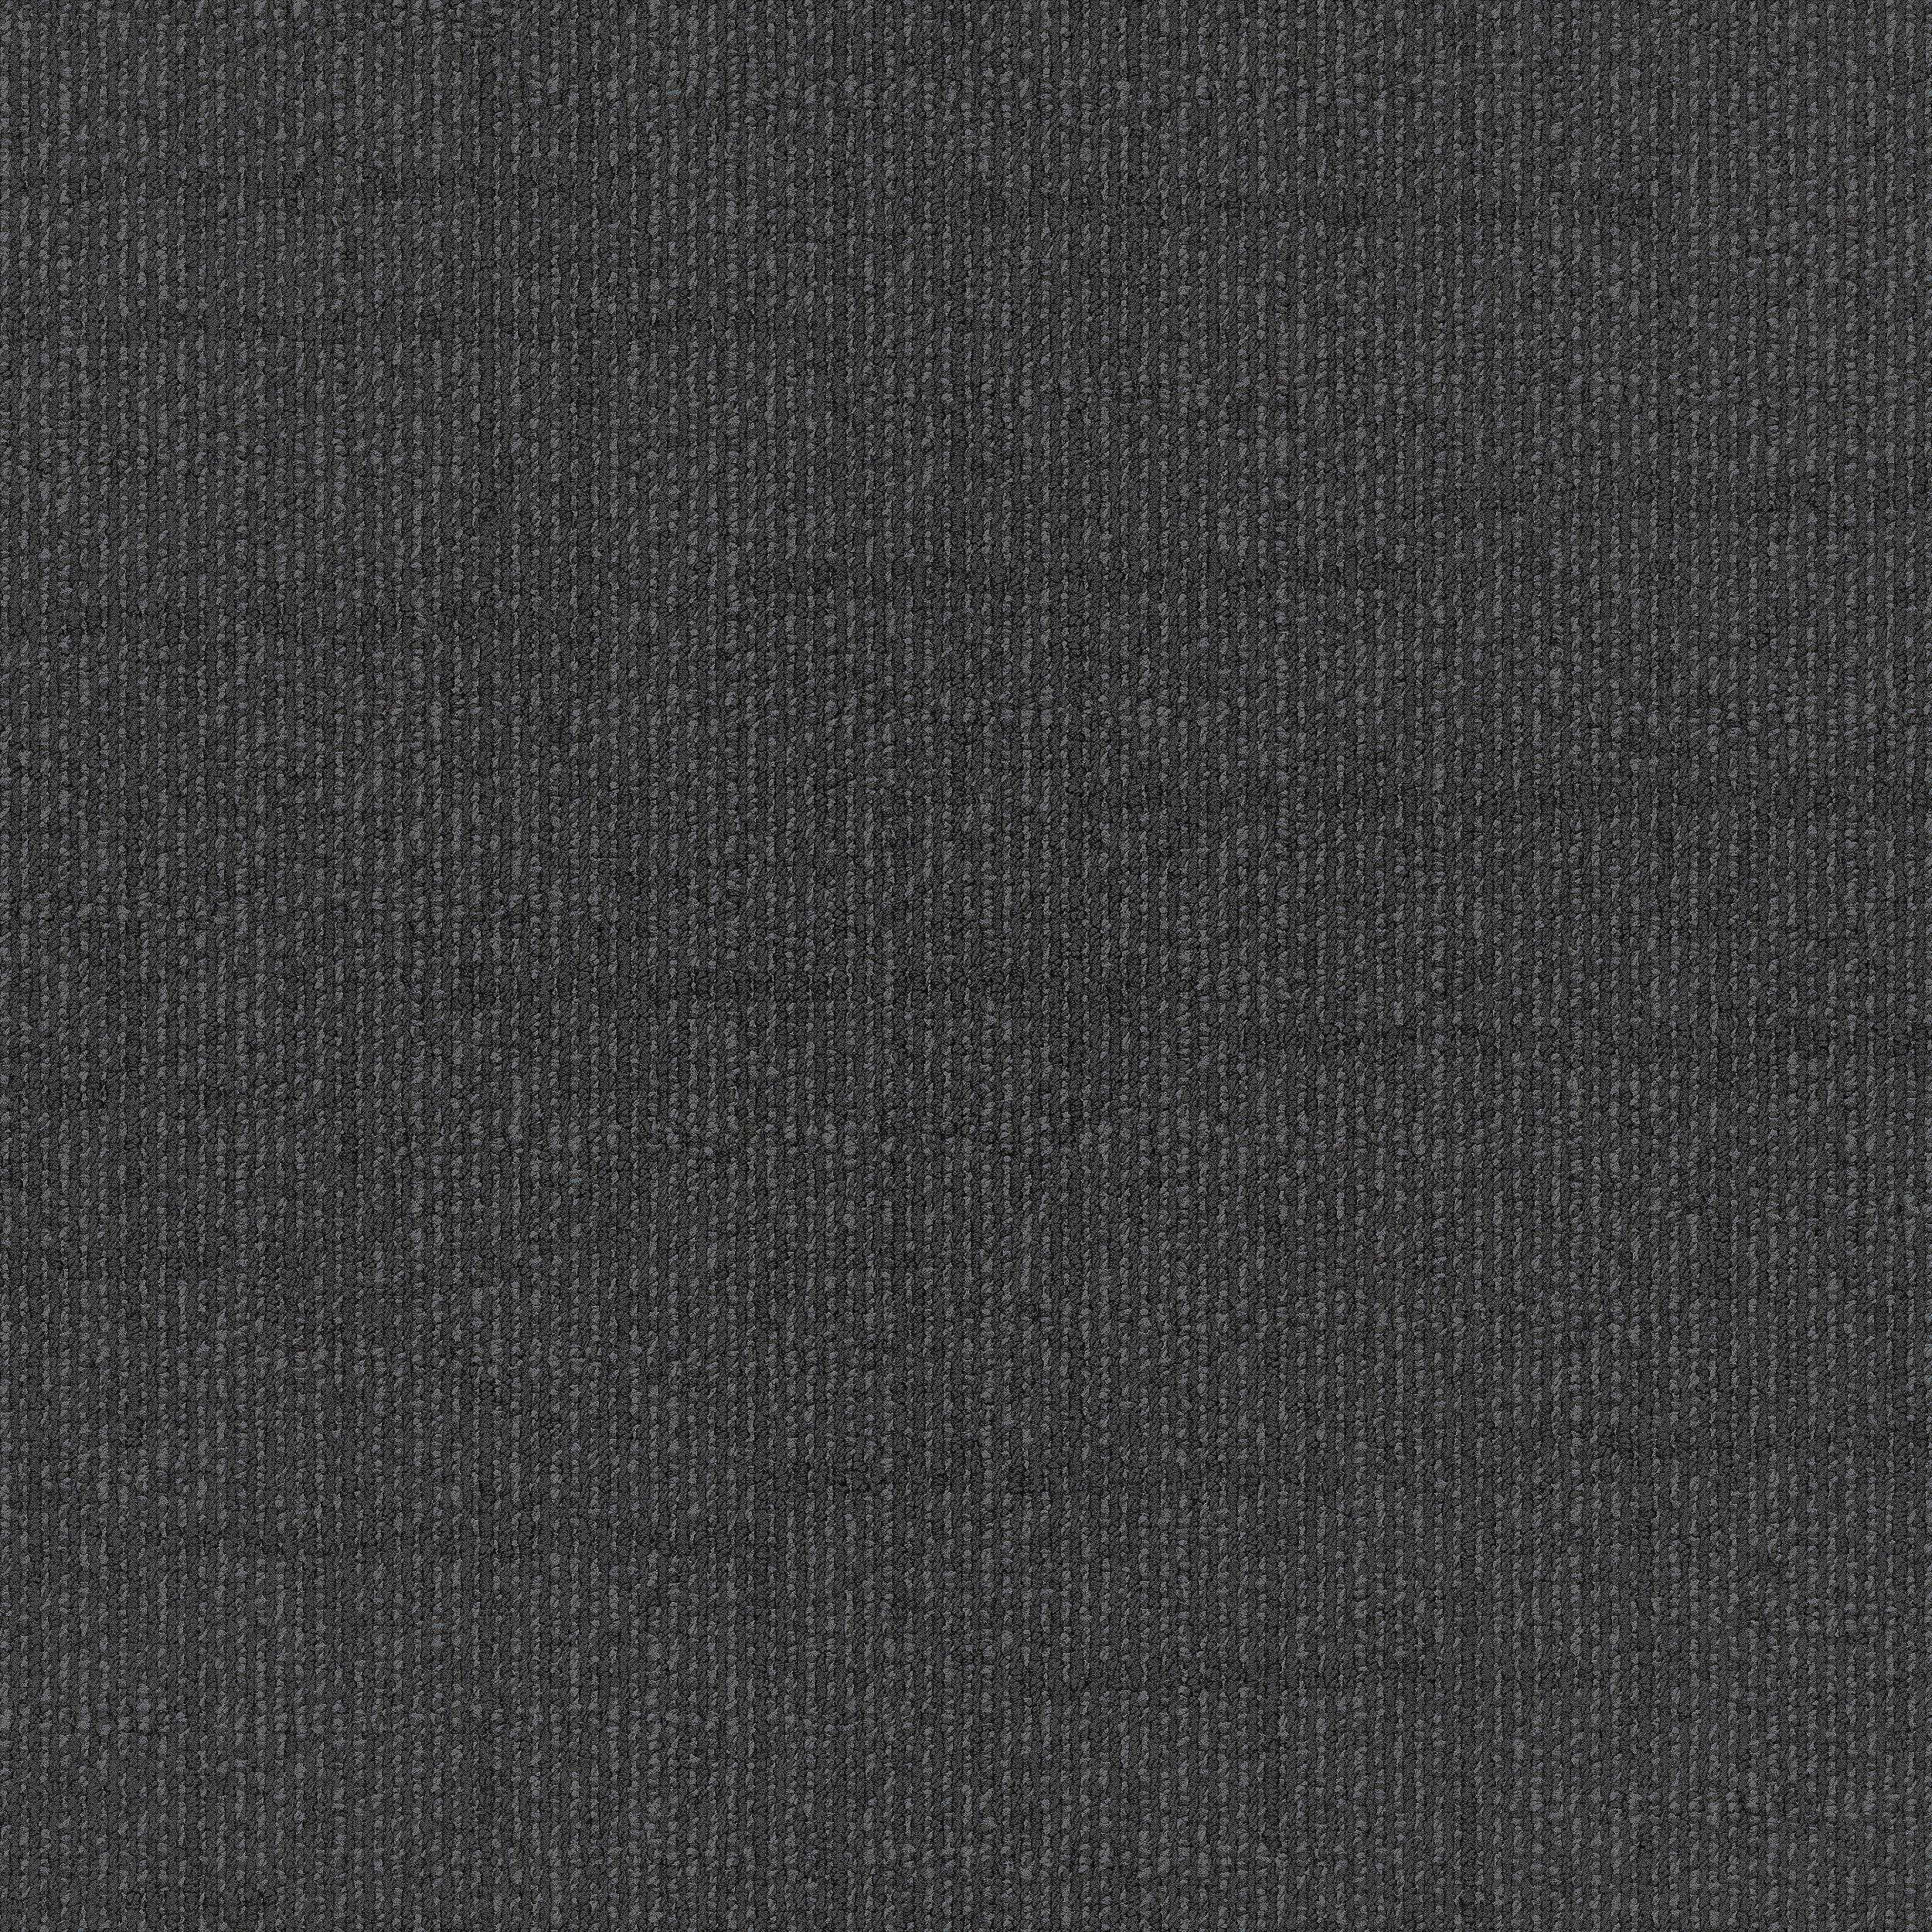 S102 Carpet Tile In Black imagen número 2